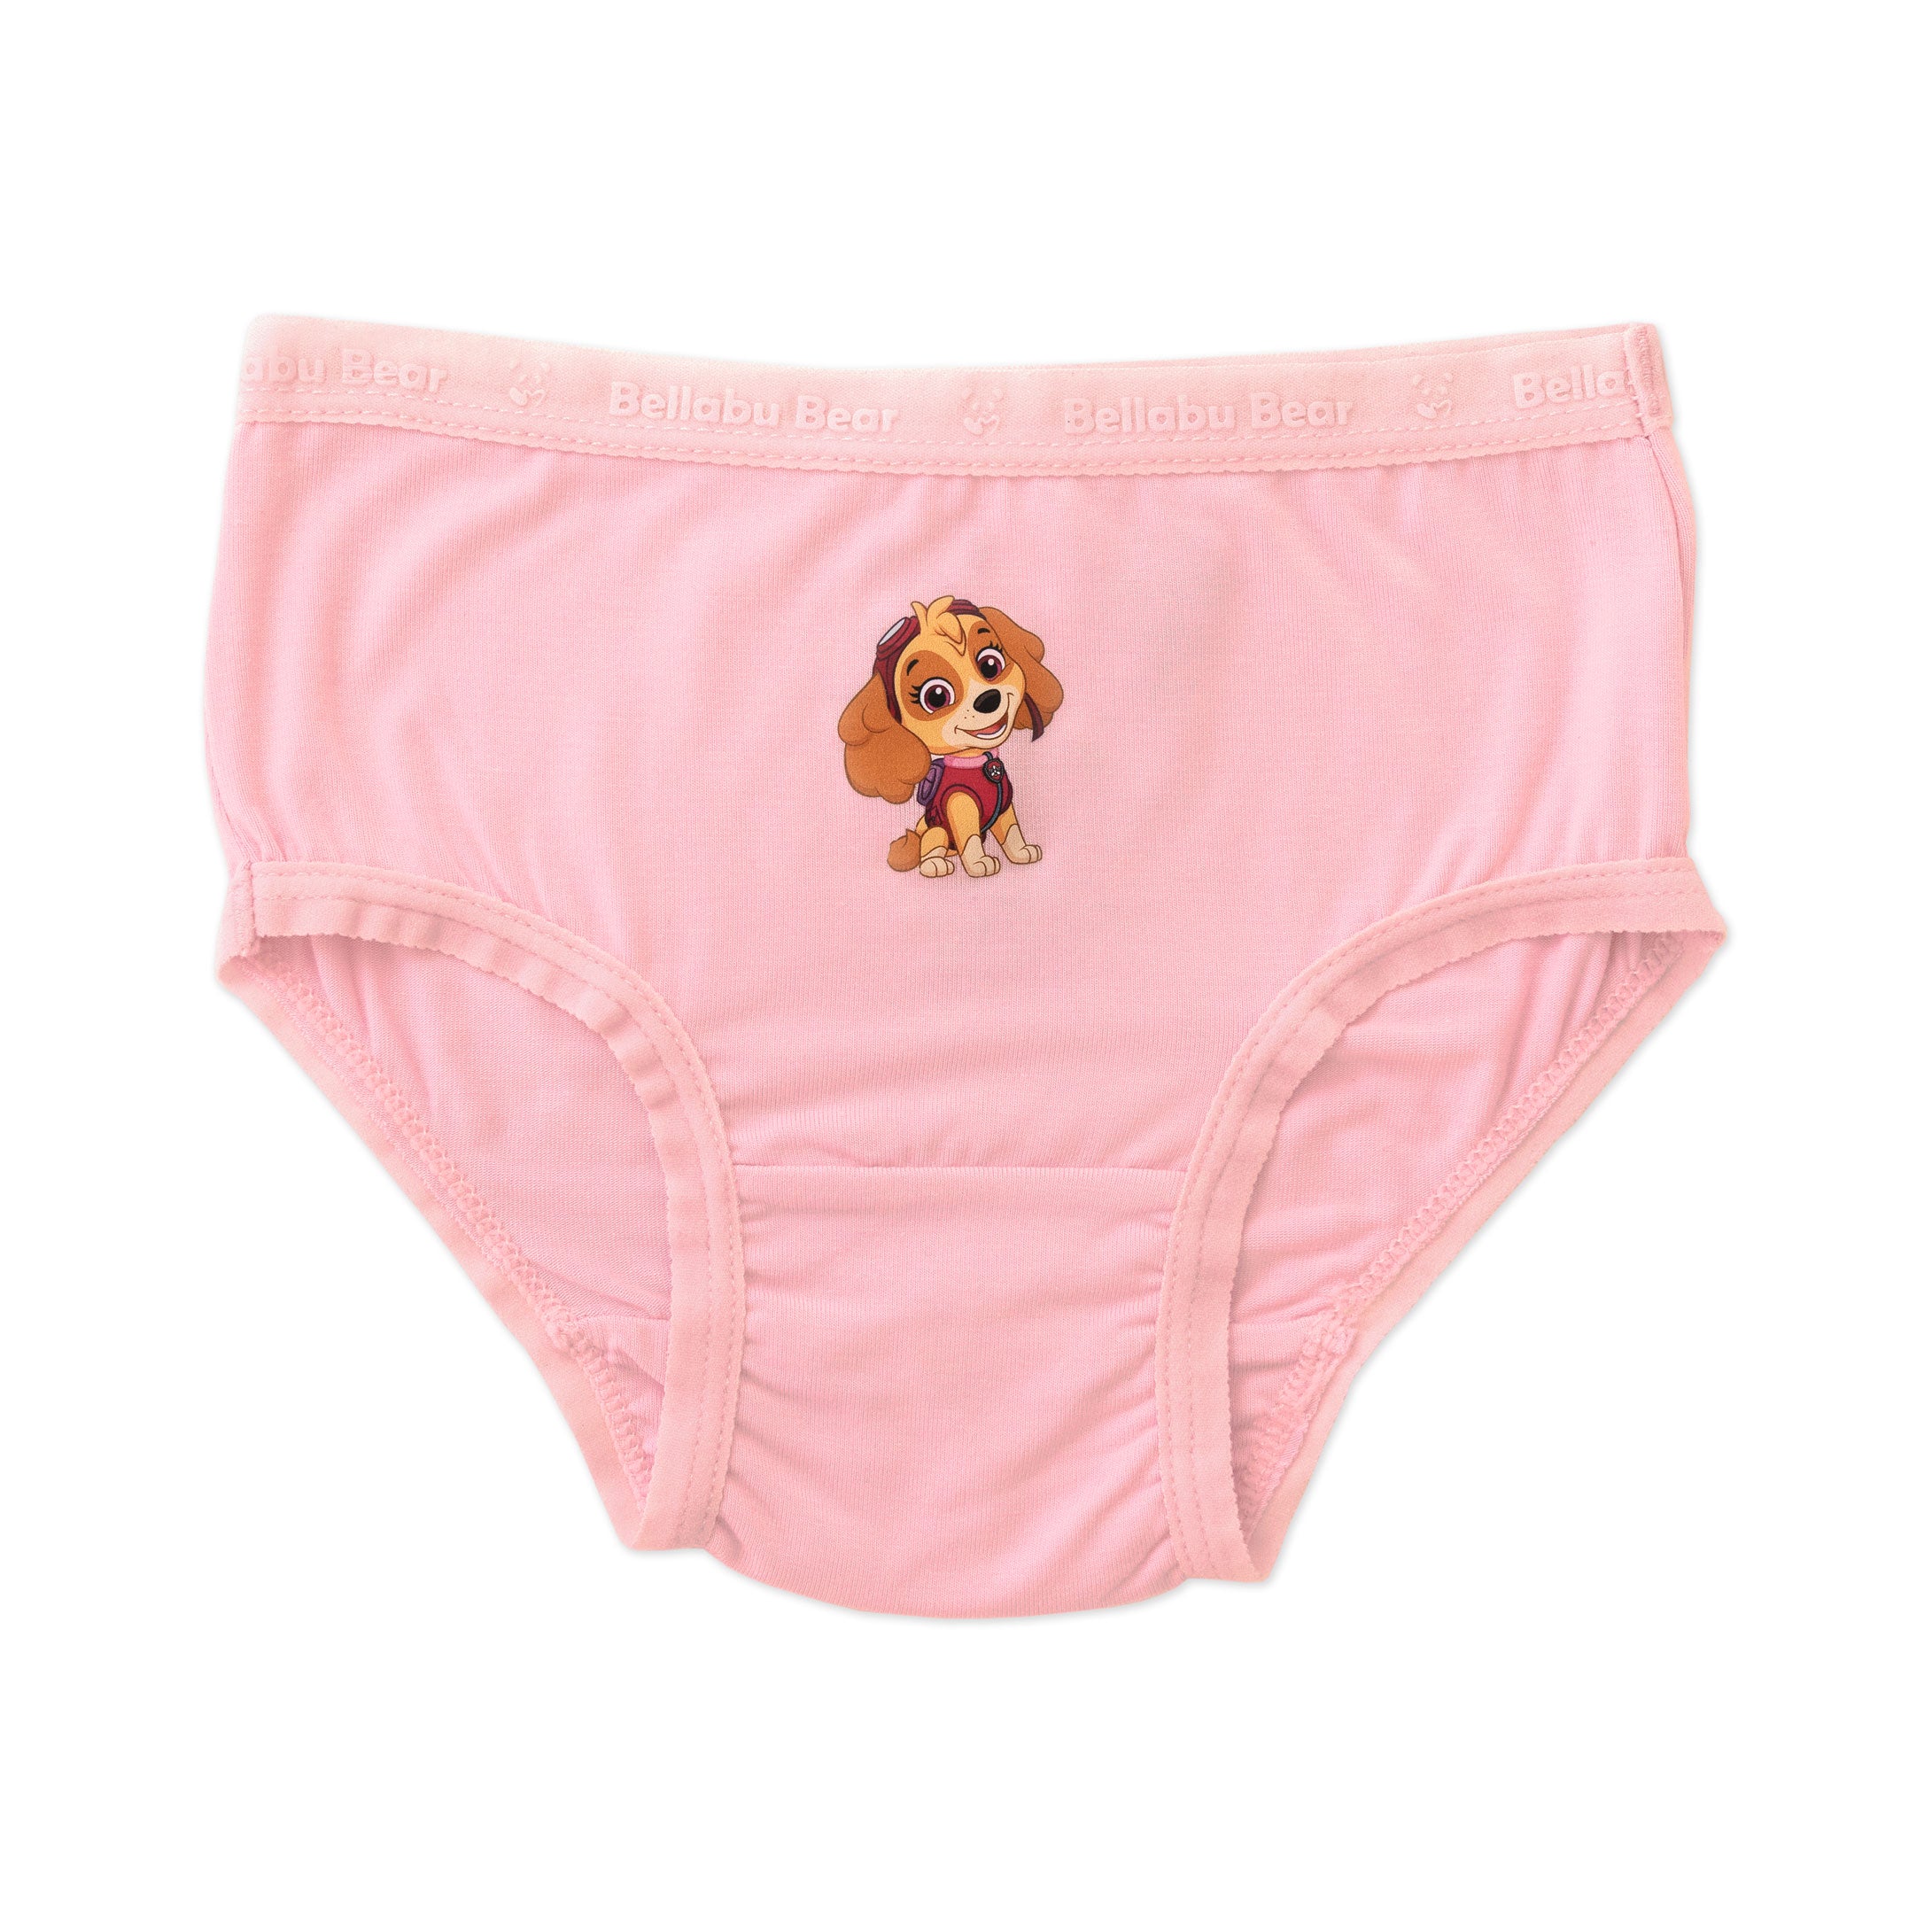 russianbare.com 5 year old girl underwear Amazon.com: 5 Year Old Girls Underwear